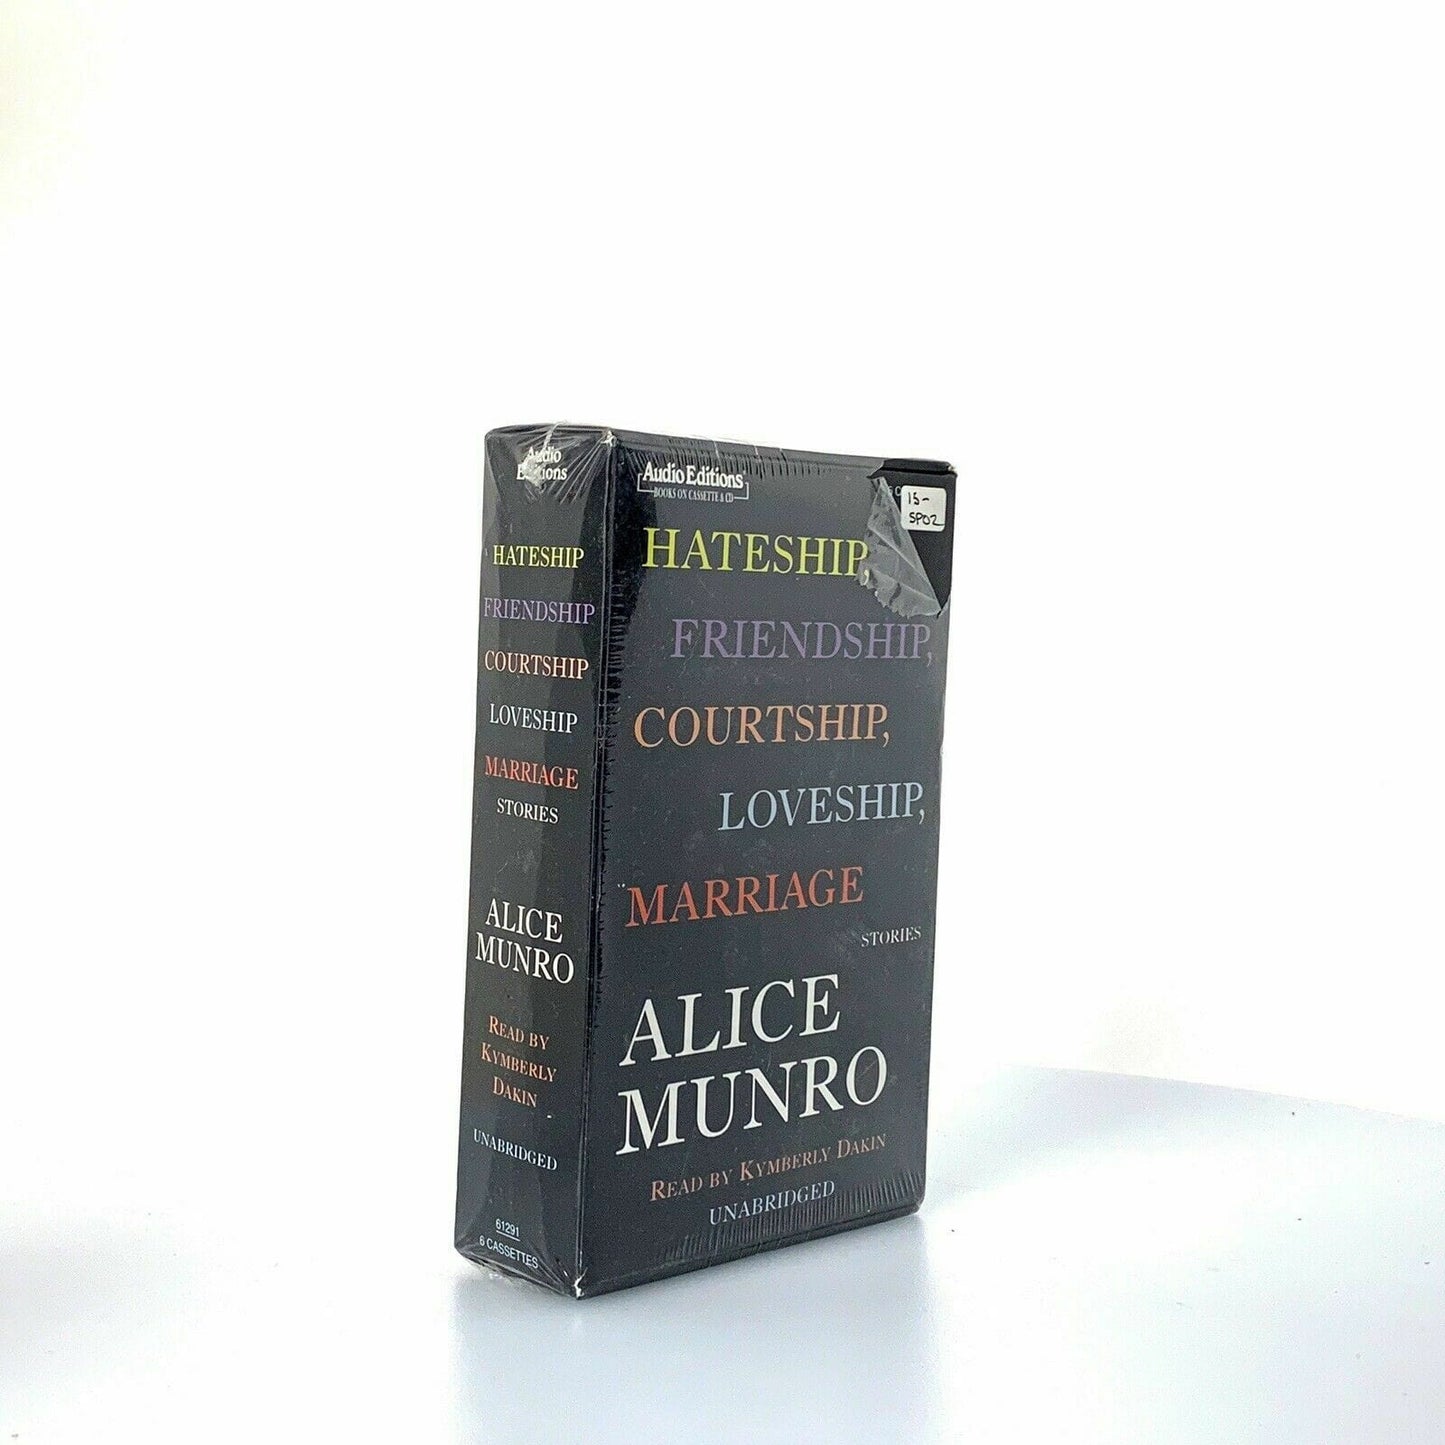 Alice Munro Hateship, Friendship, Courtship, Loveship, Stories Audiobook On Tape